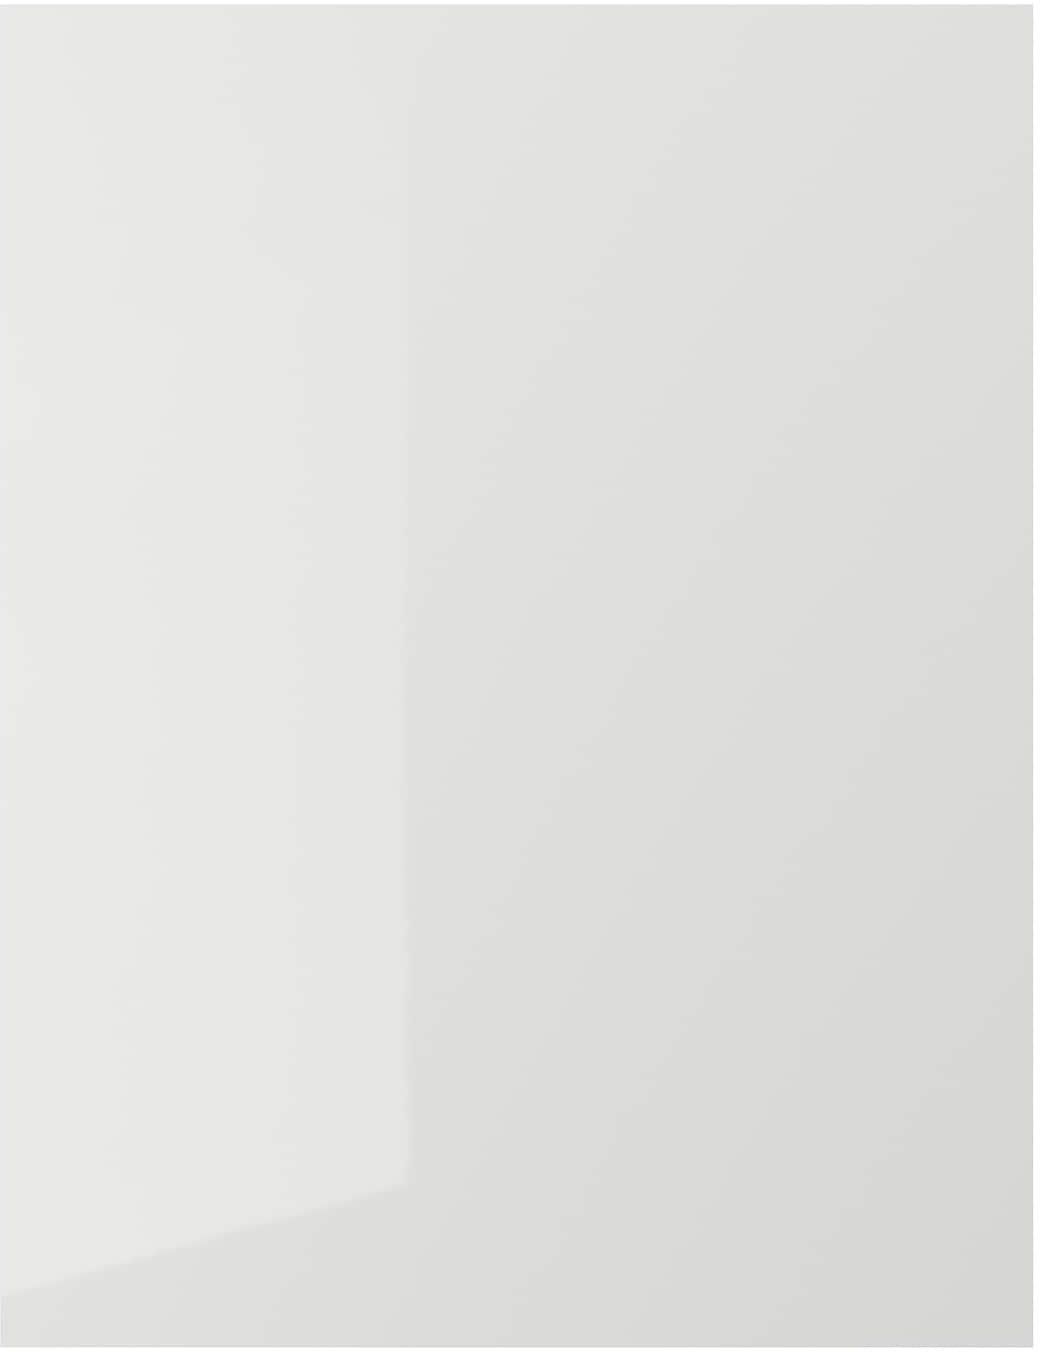 RINGHULT Cover panel - high-gloss light grey 62x80 cm